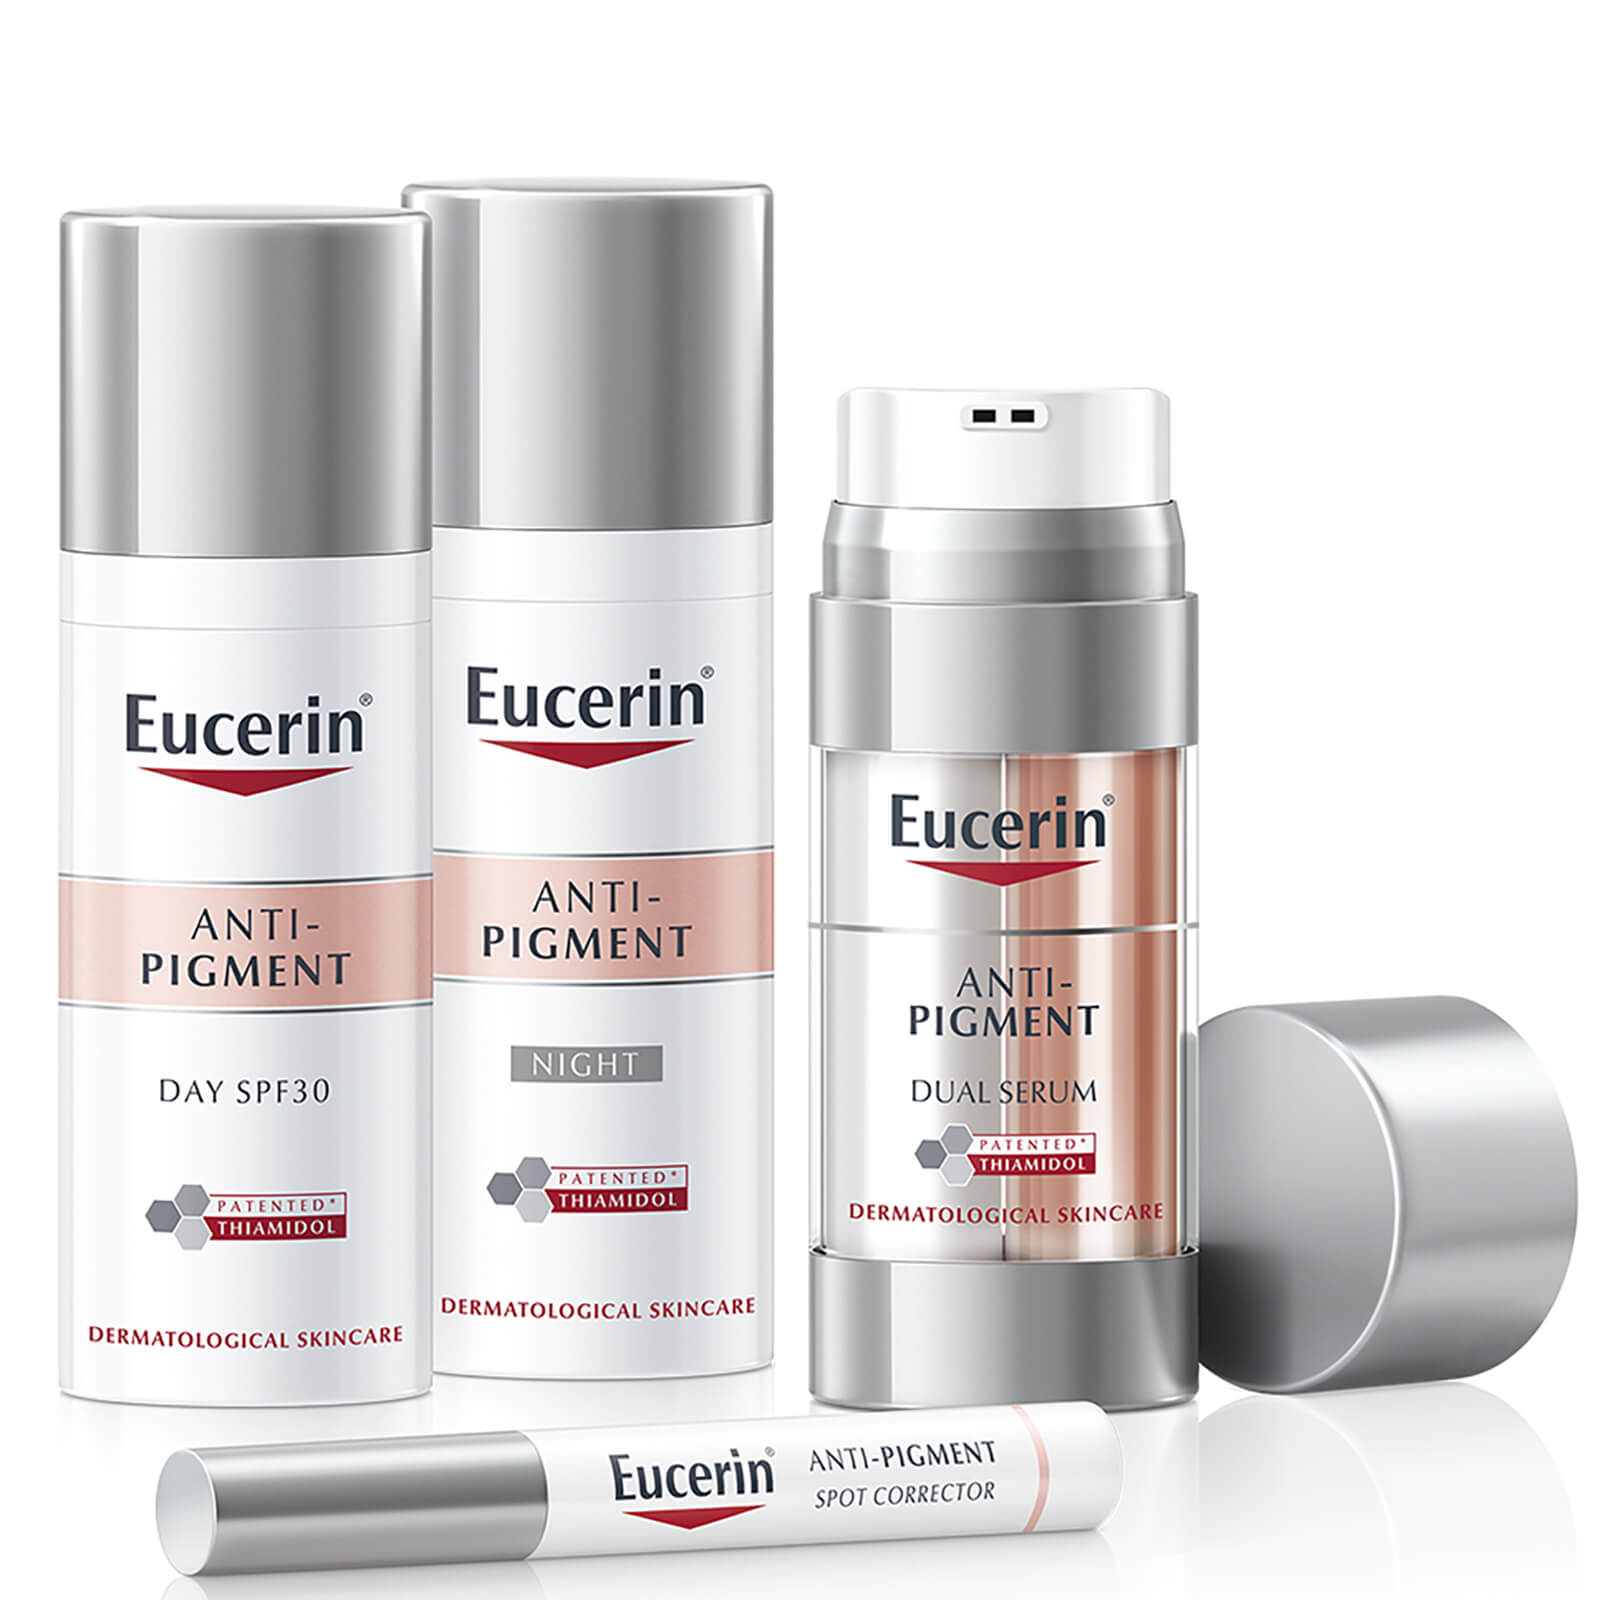 Eucerin Original Cream(Product Image) | PharmaServe